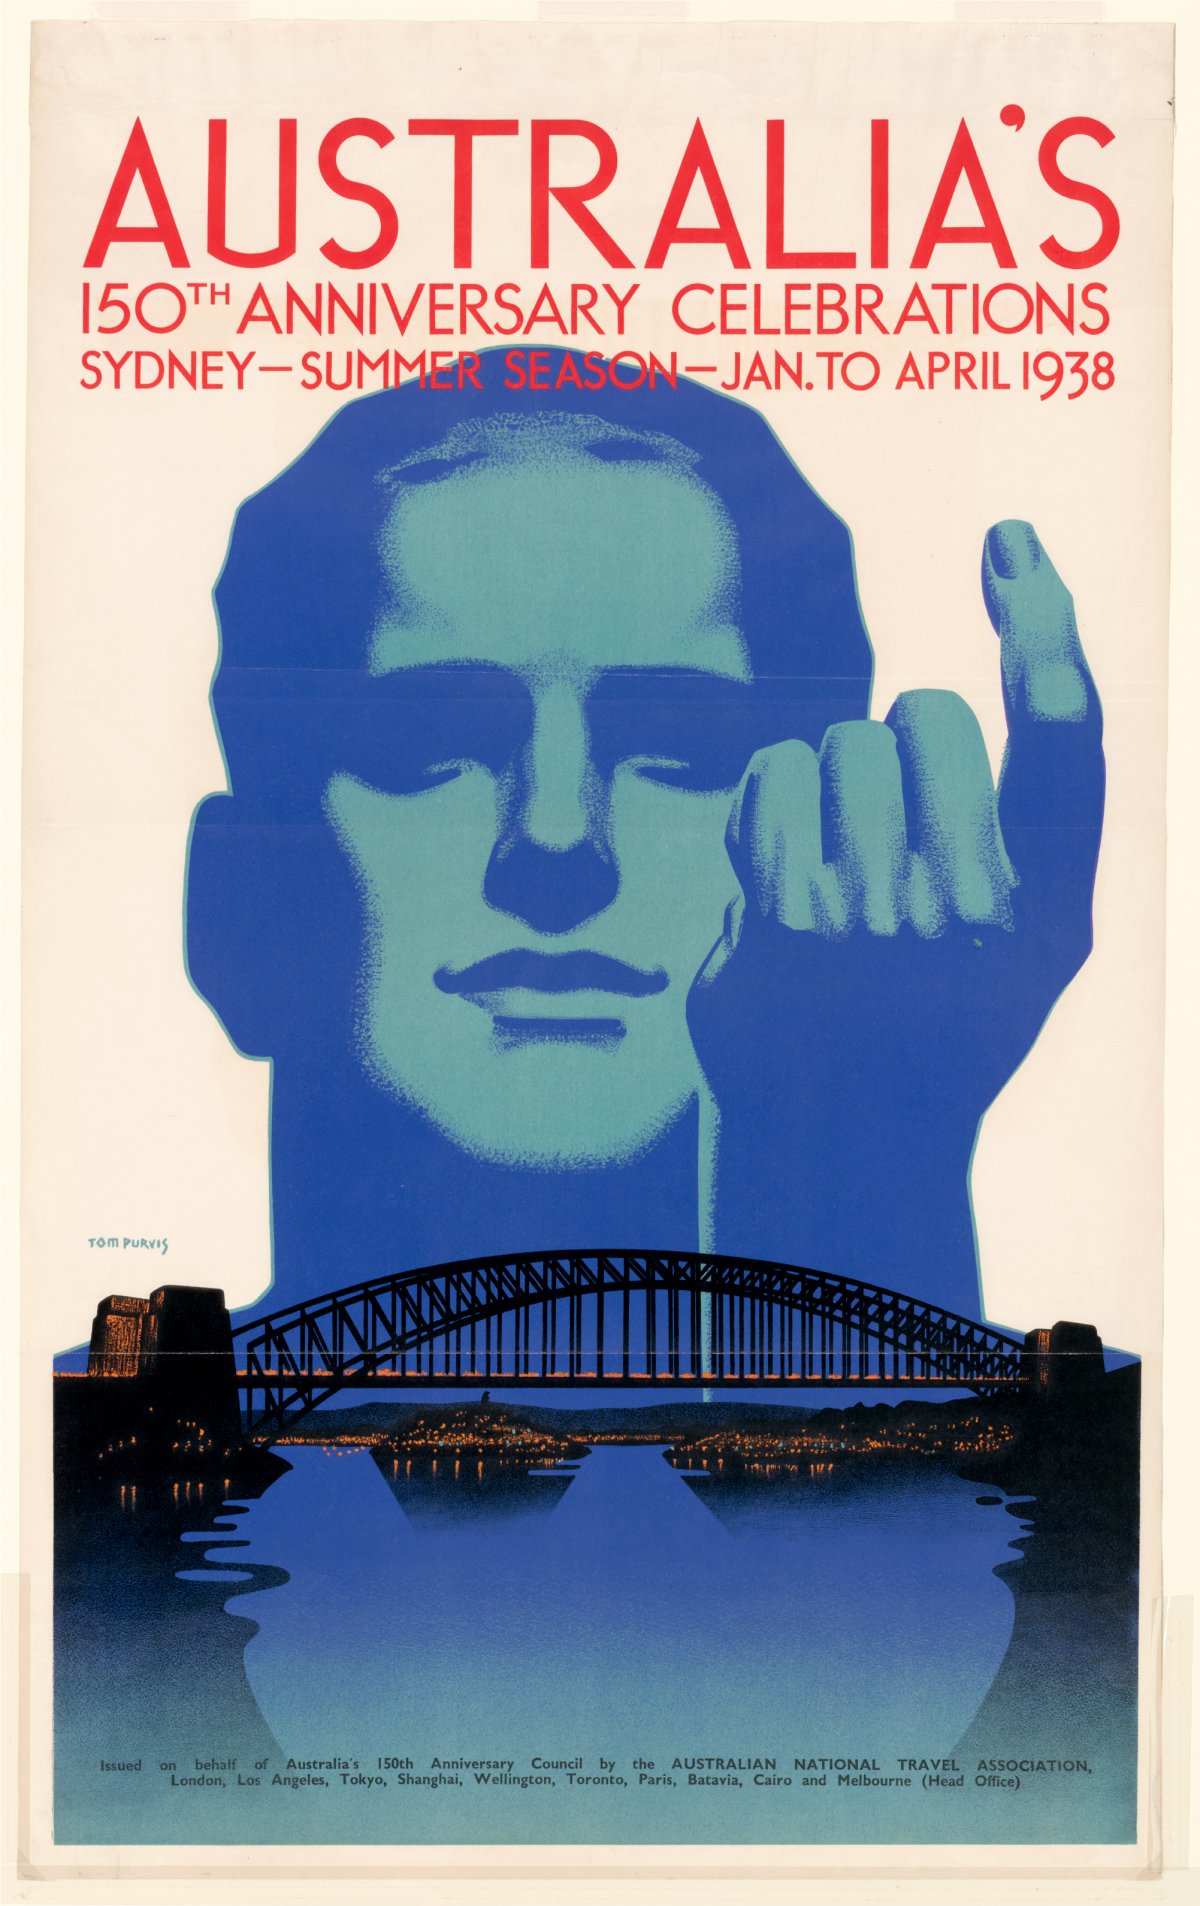 Poster advertising Australia's 150th Anniversary Celebrations Sydney—Summer Season—January to April 1938